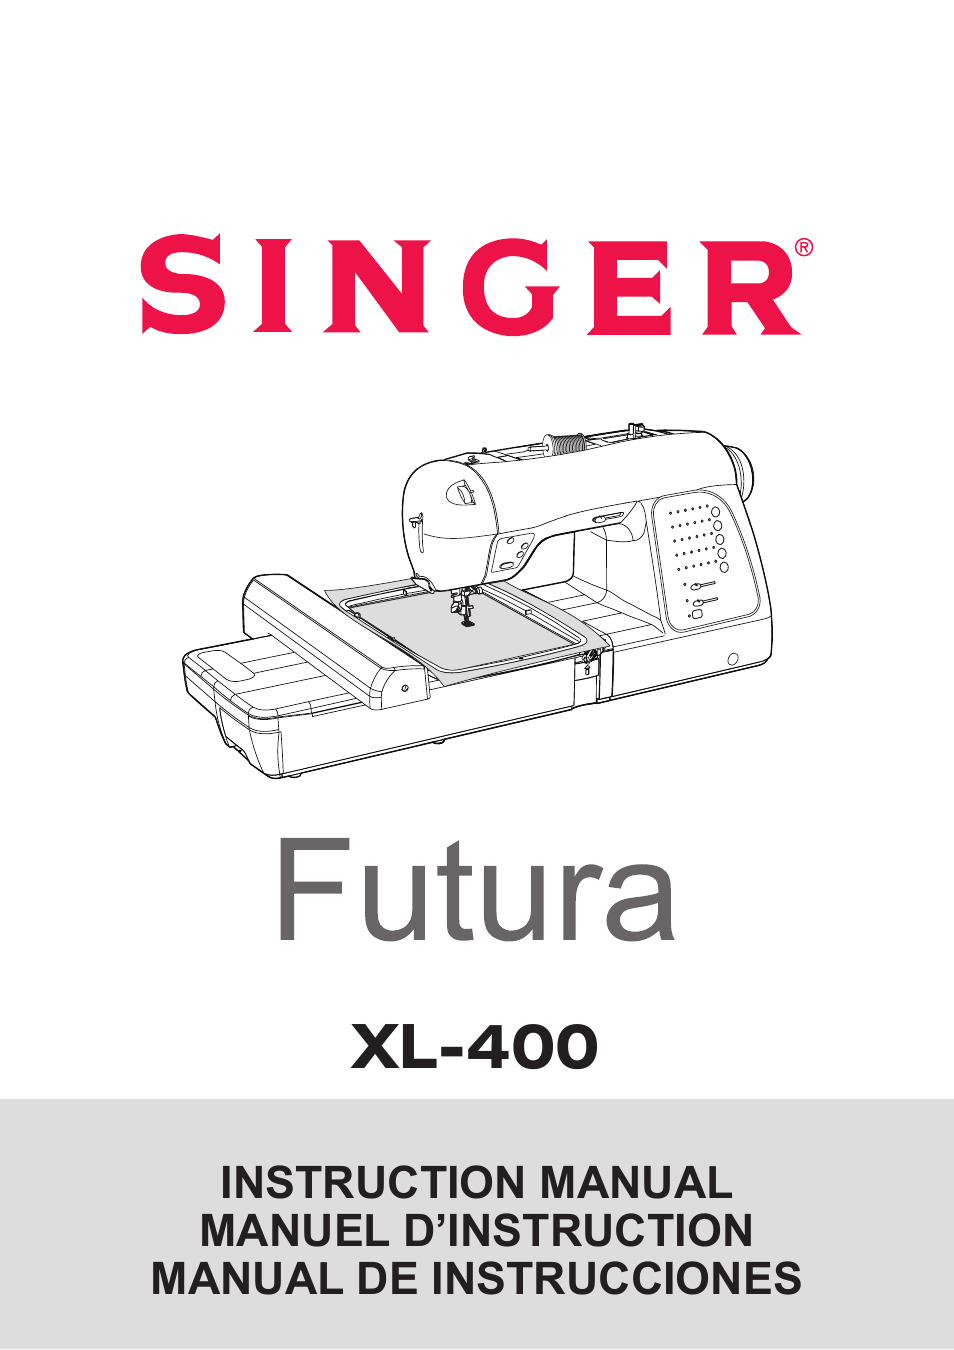 SINGER XL-400 FUTURA Instruction Manual User Manual | 112 pages